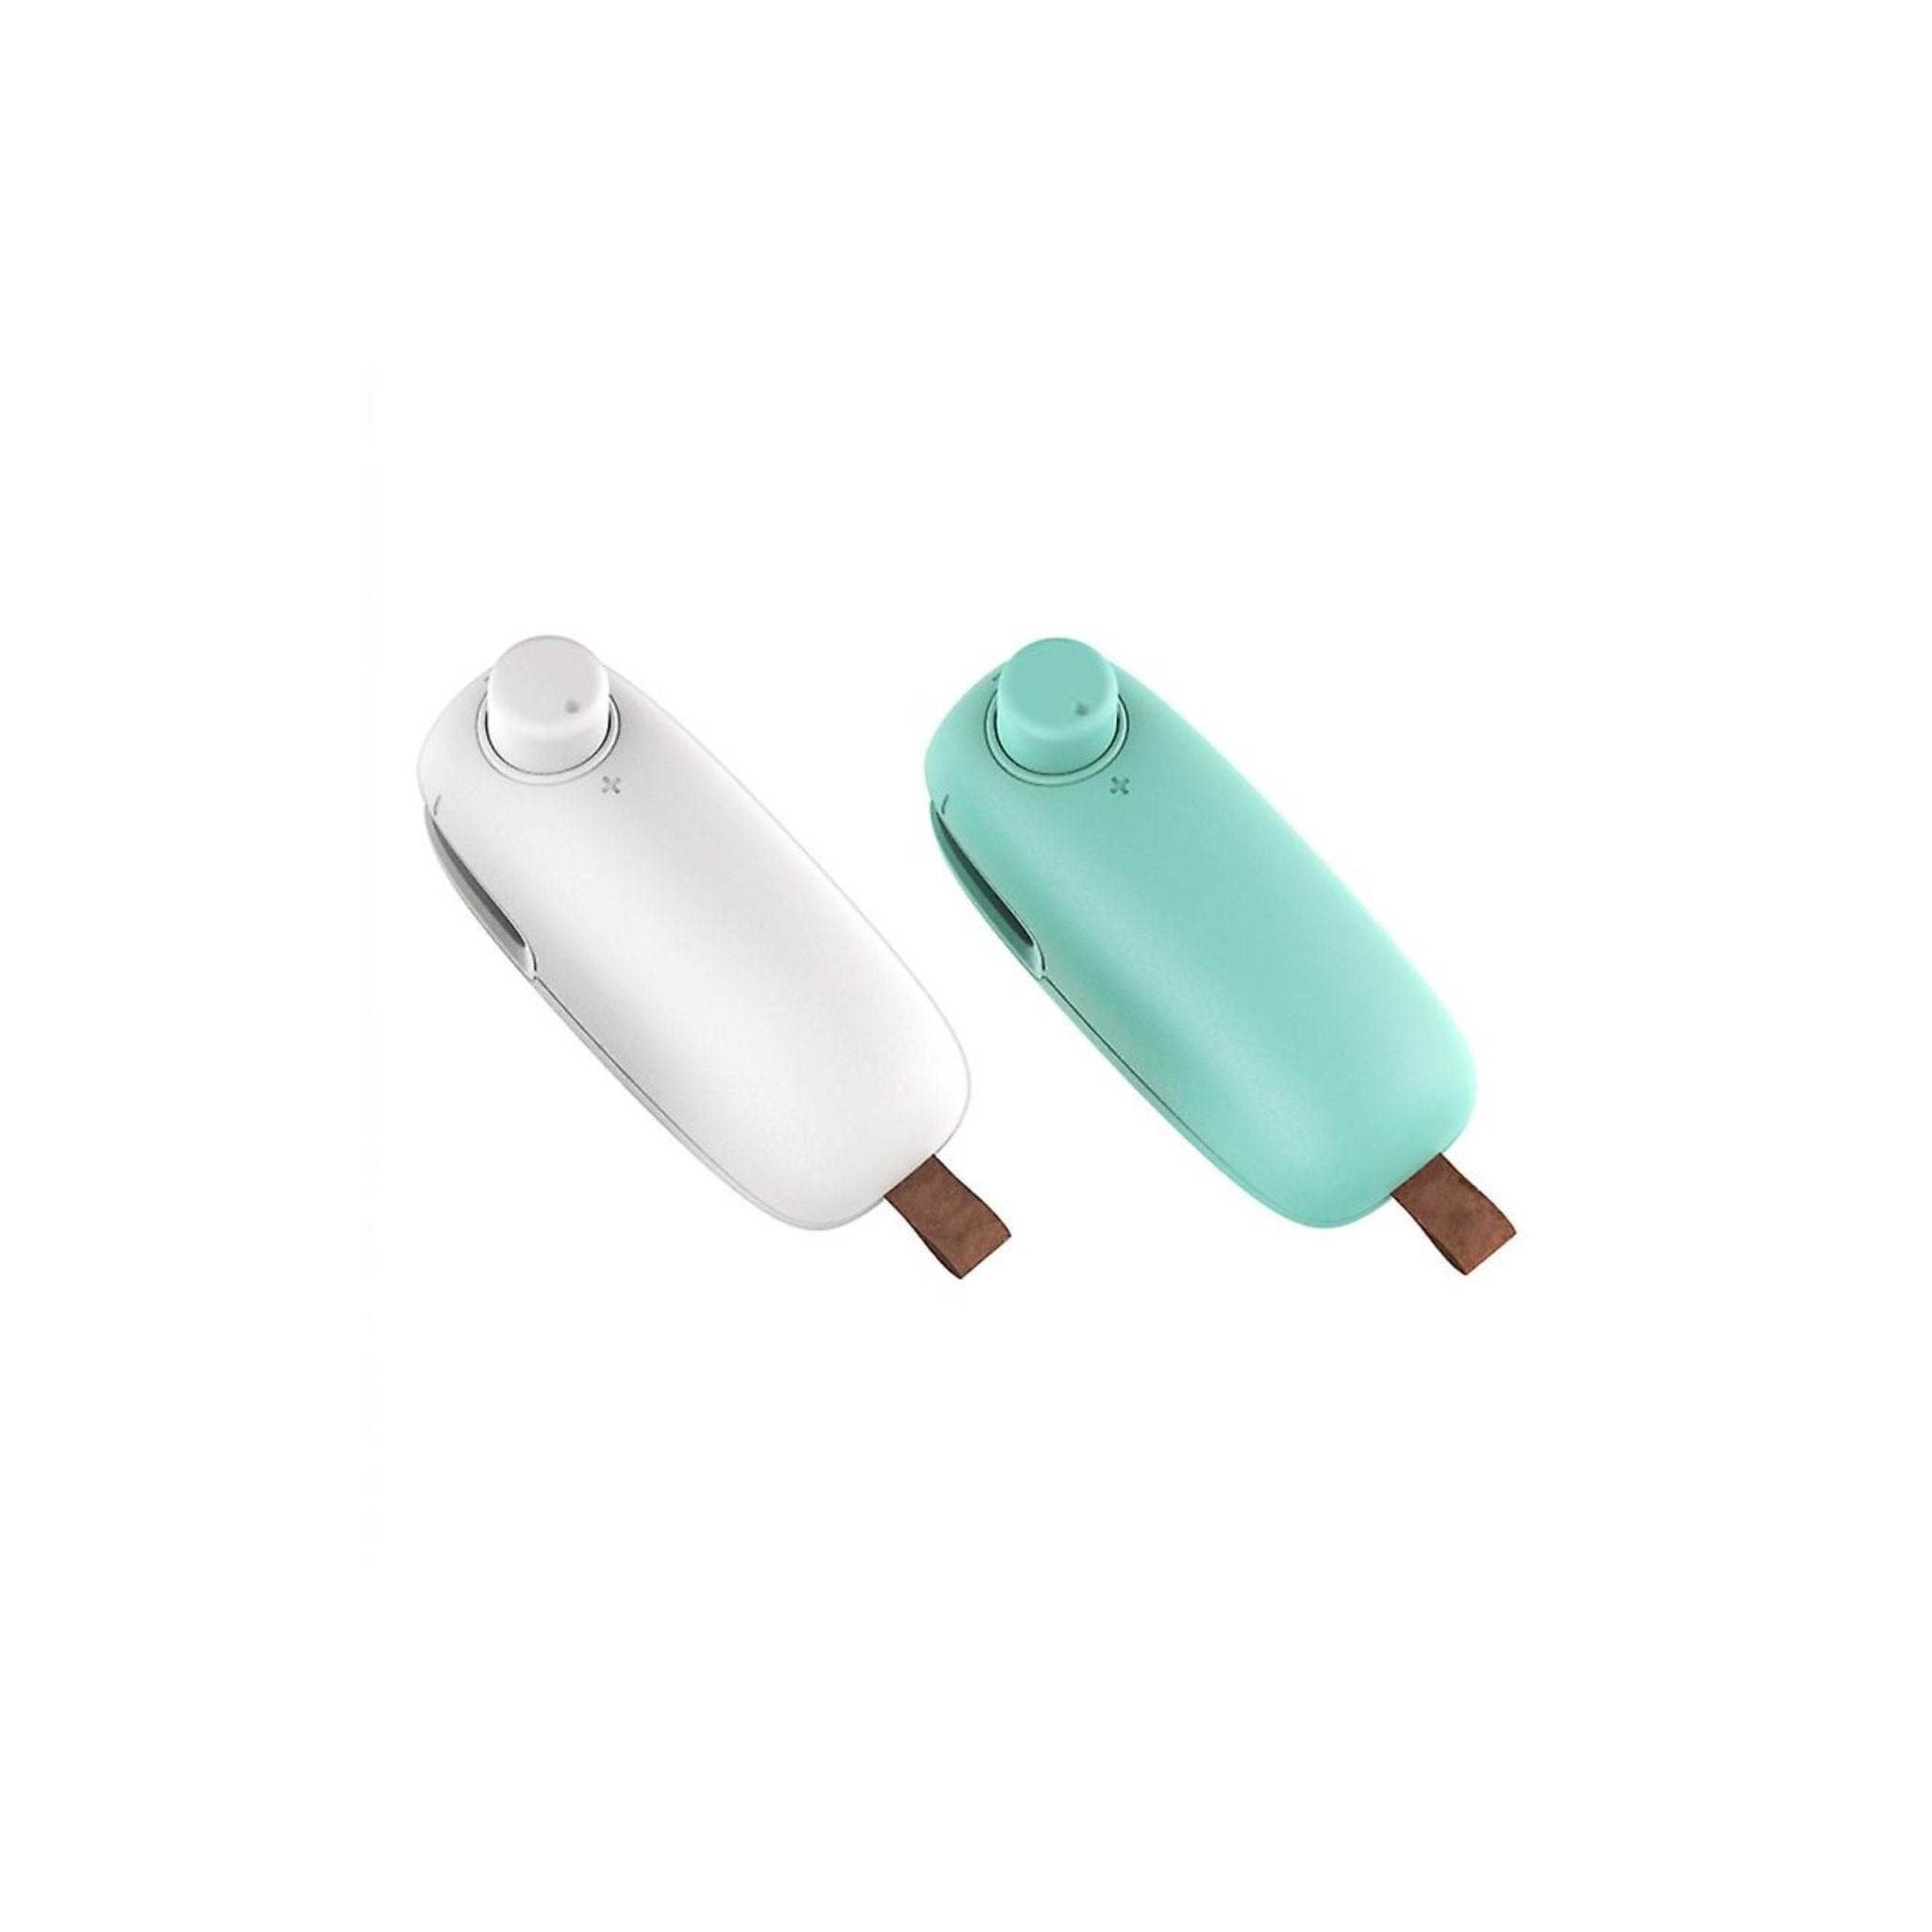 MI Xiaomi 90fun Mini Electric Food Sealing Clips White by Banana IT